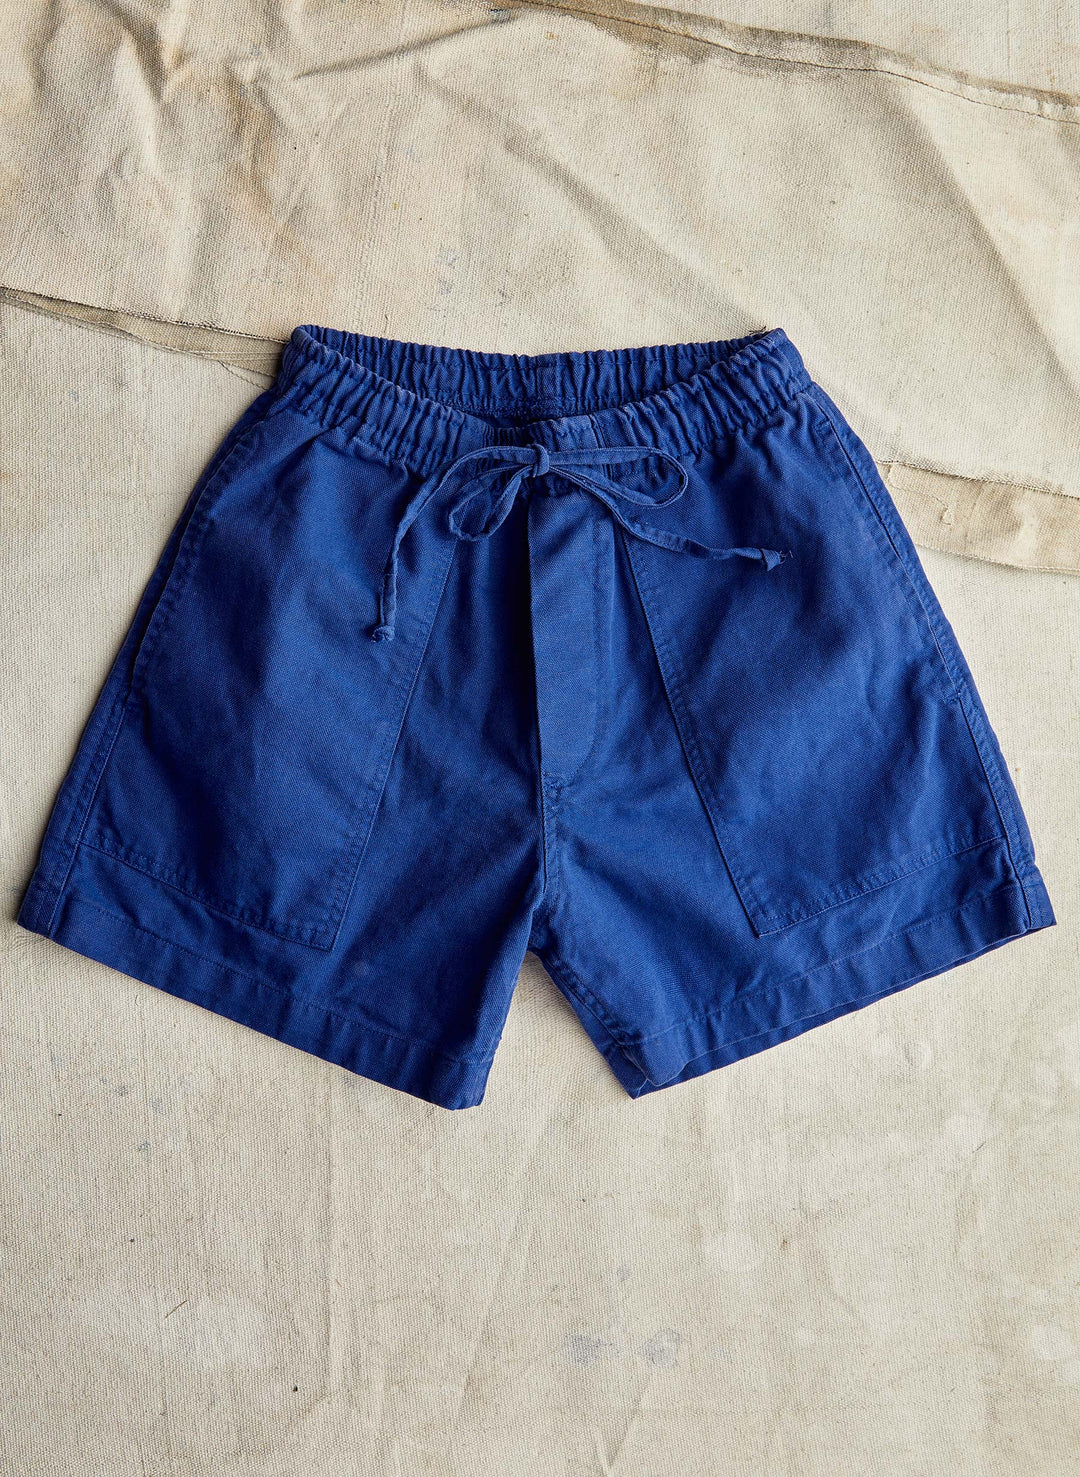 Navy Blue Lounge Shorts  Loungewear Shorts for Women – Born Primitive